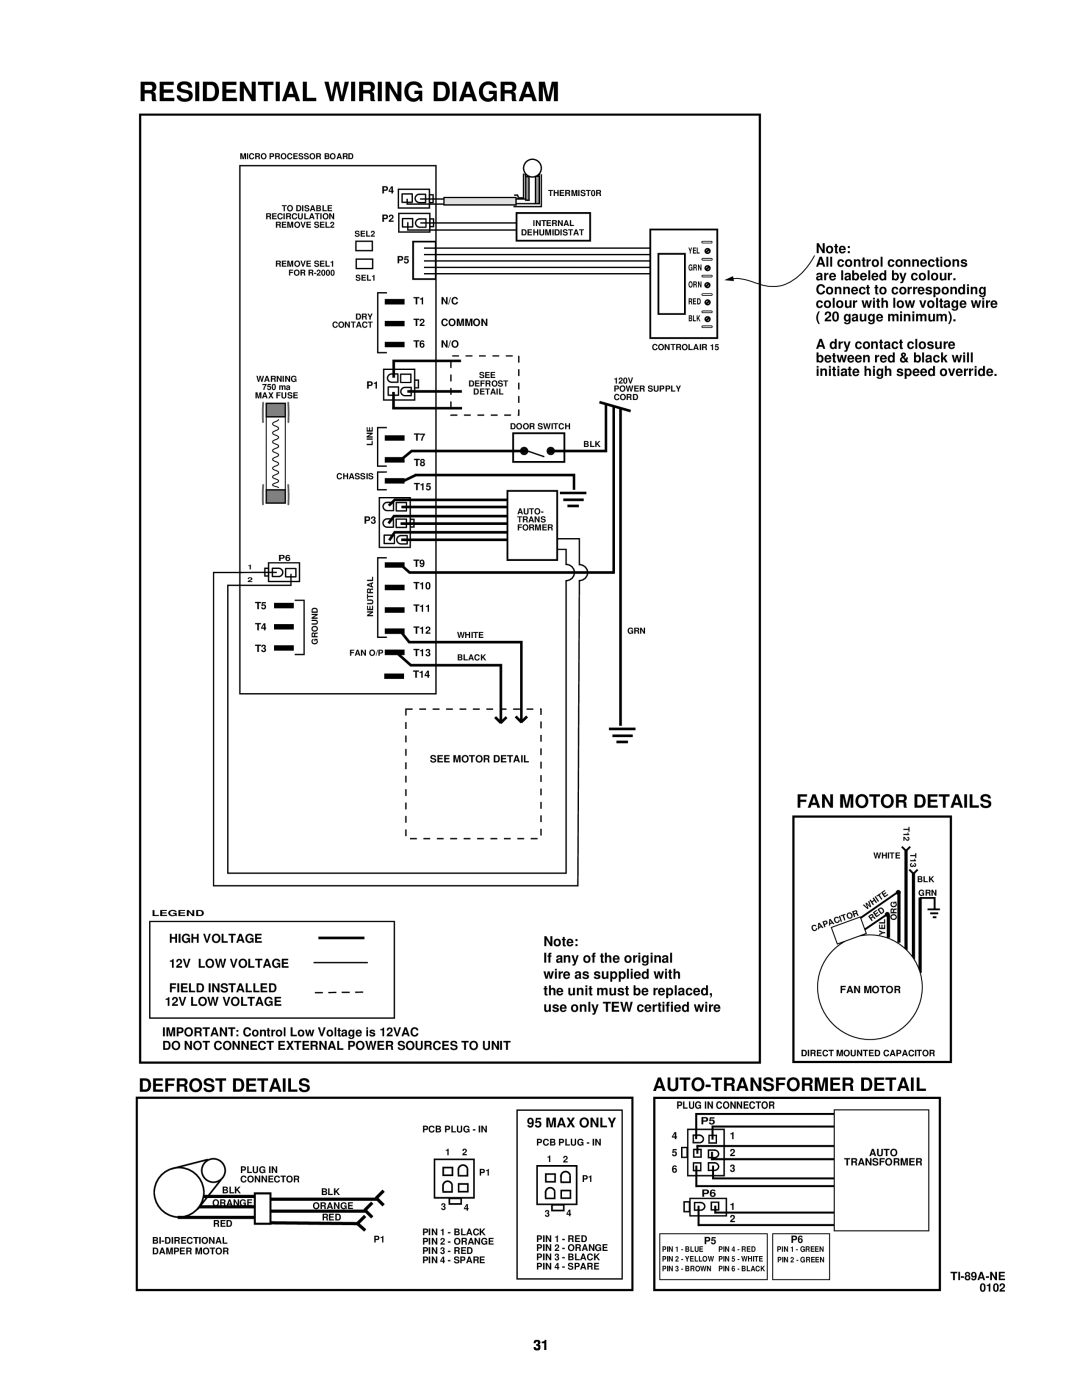 Lifebreath 200ERVD, 200MAX, 95MAX Residential Wiring Diagram, Fan Motor Details, Defrost Details, Auto-Transformerdetail 